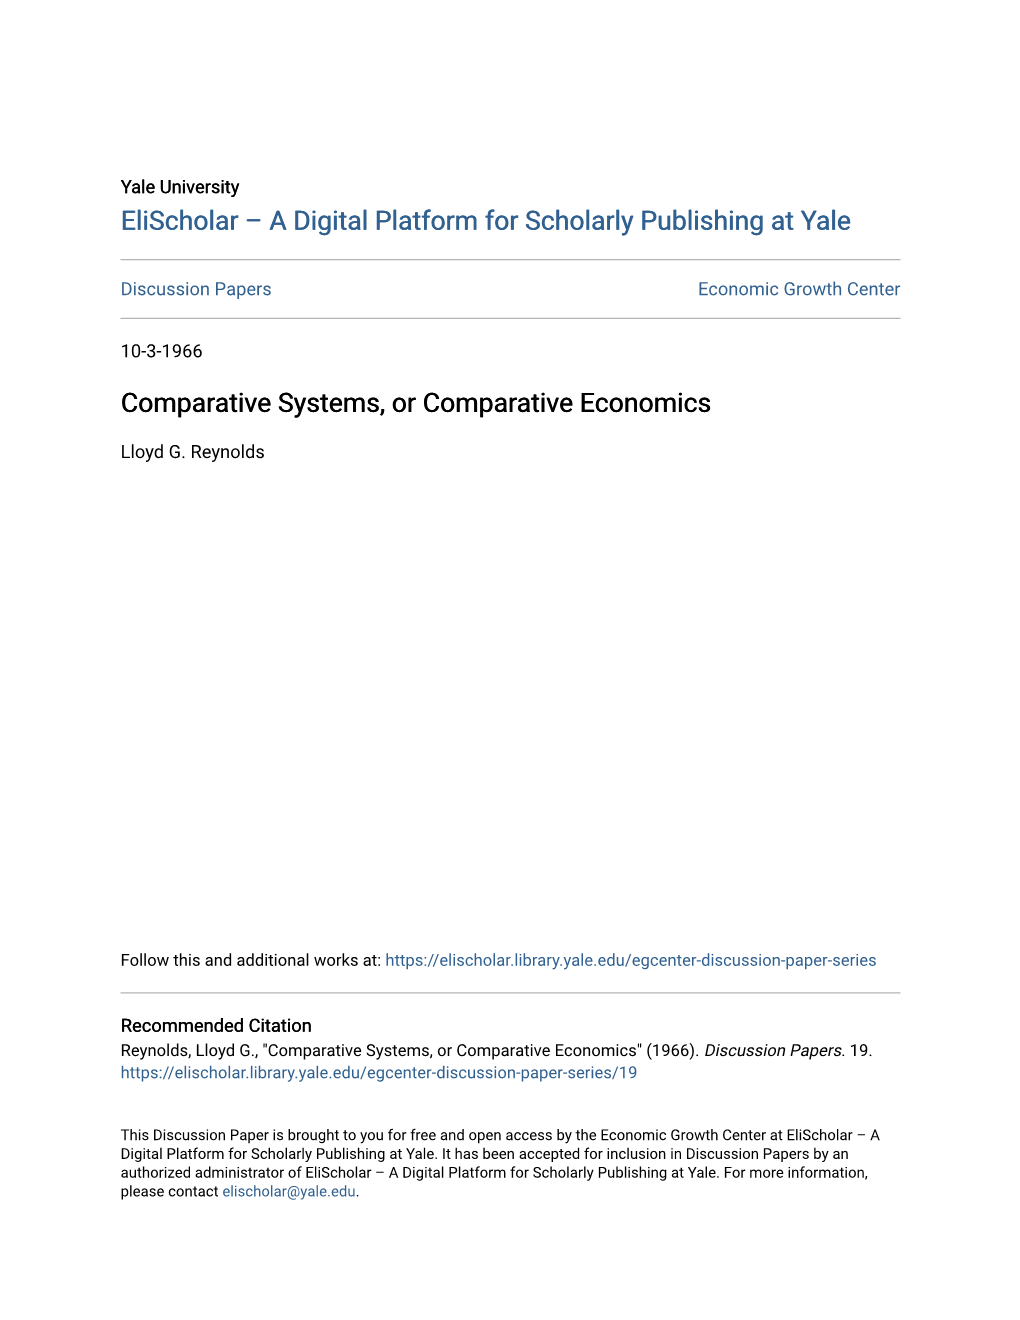 Comparative Systems, Or Comparative Economics